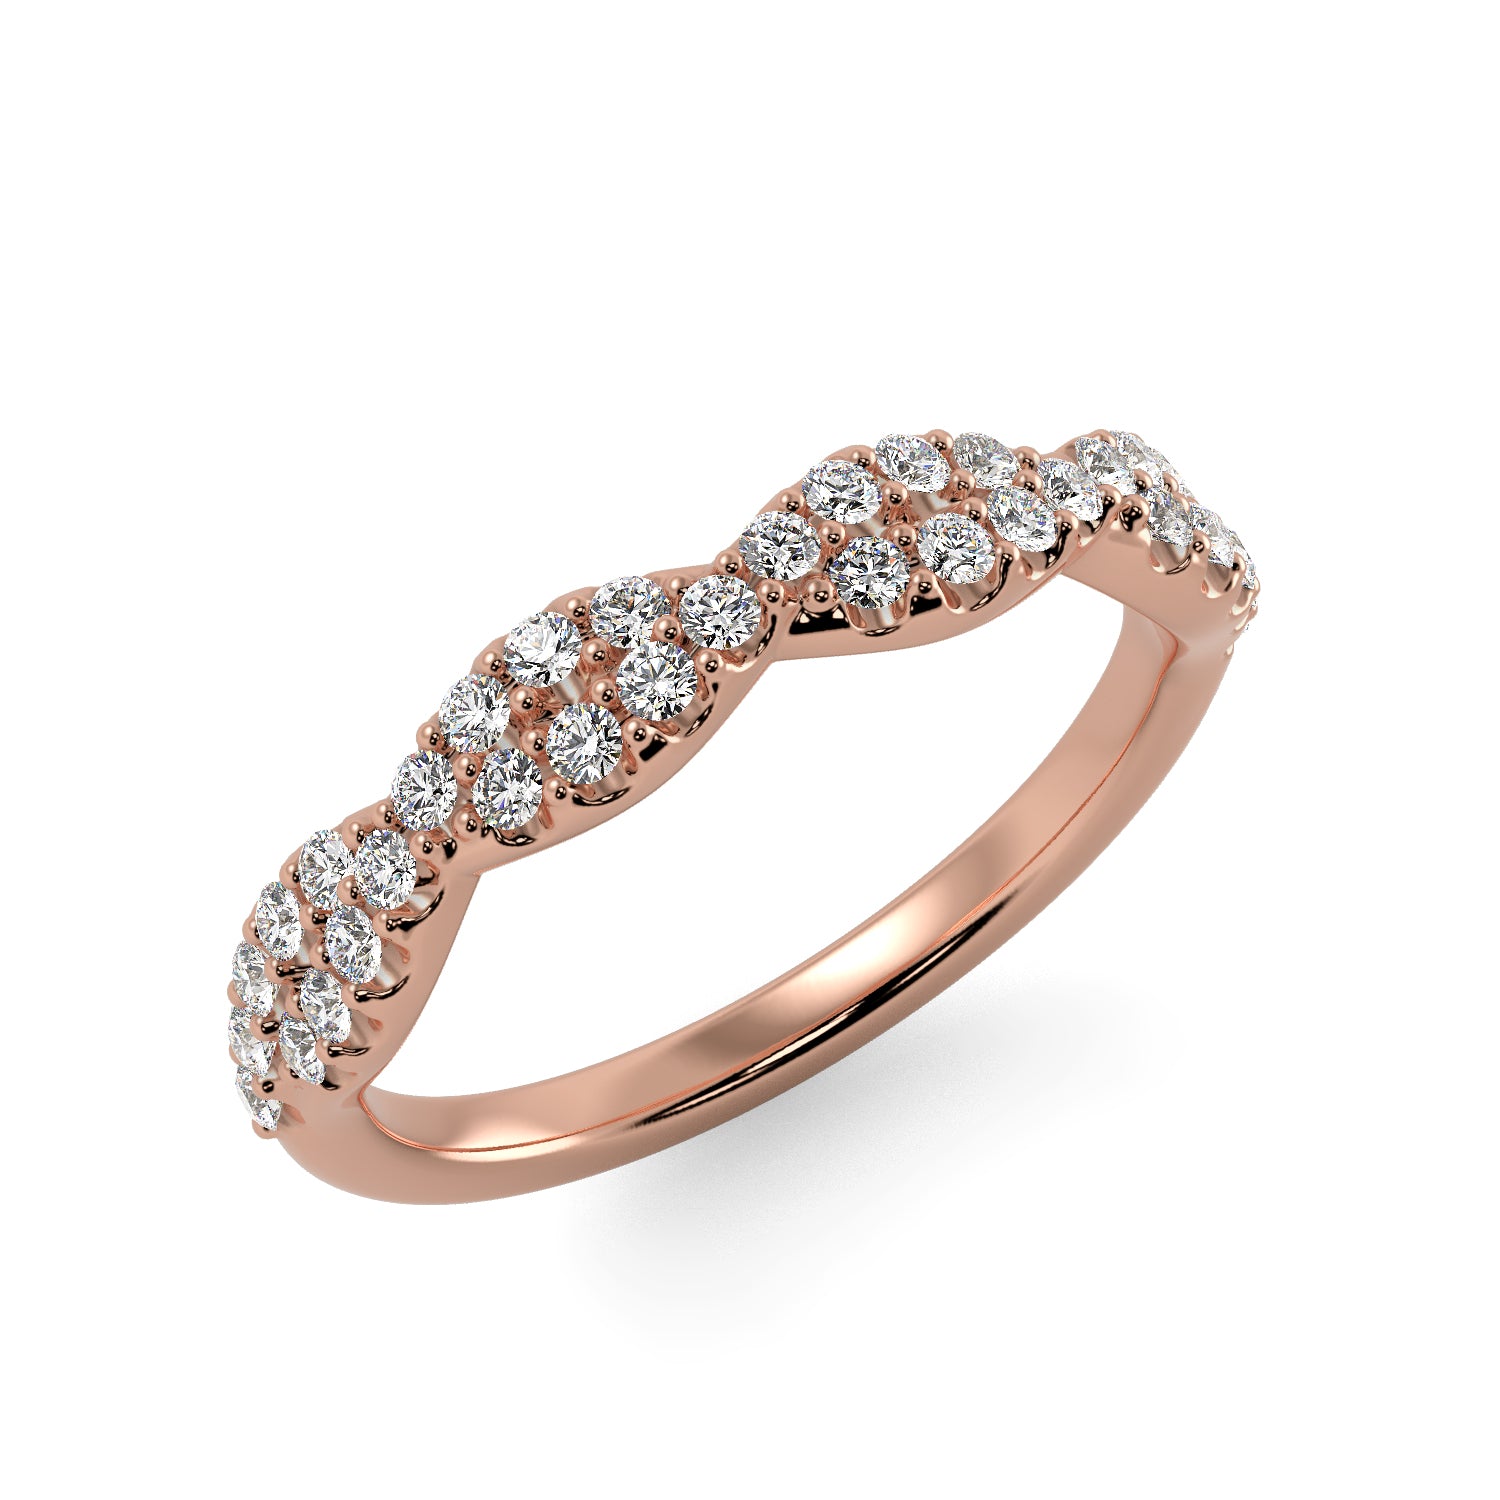 Diamond Twist Ring in Rose Gold